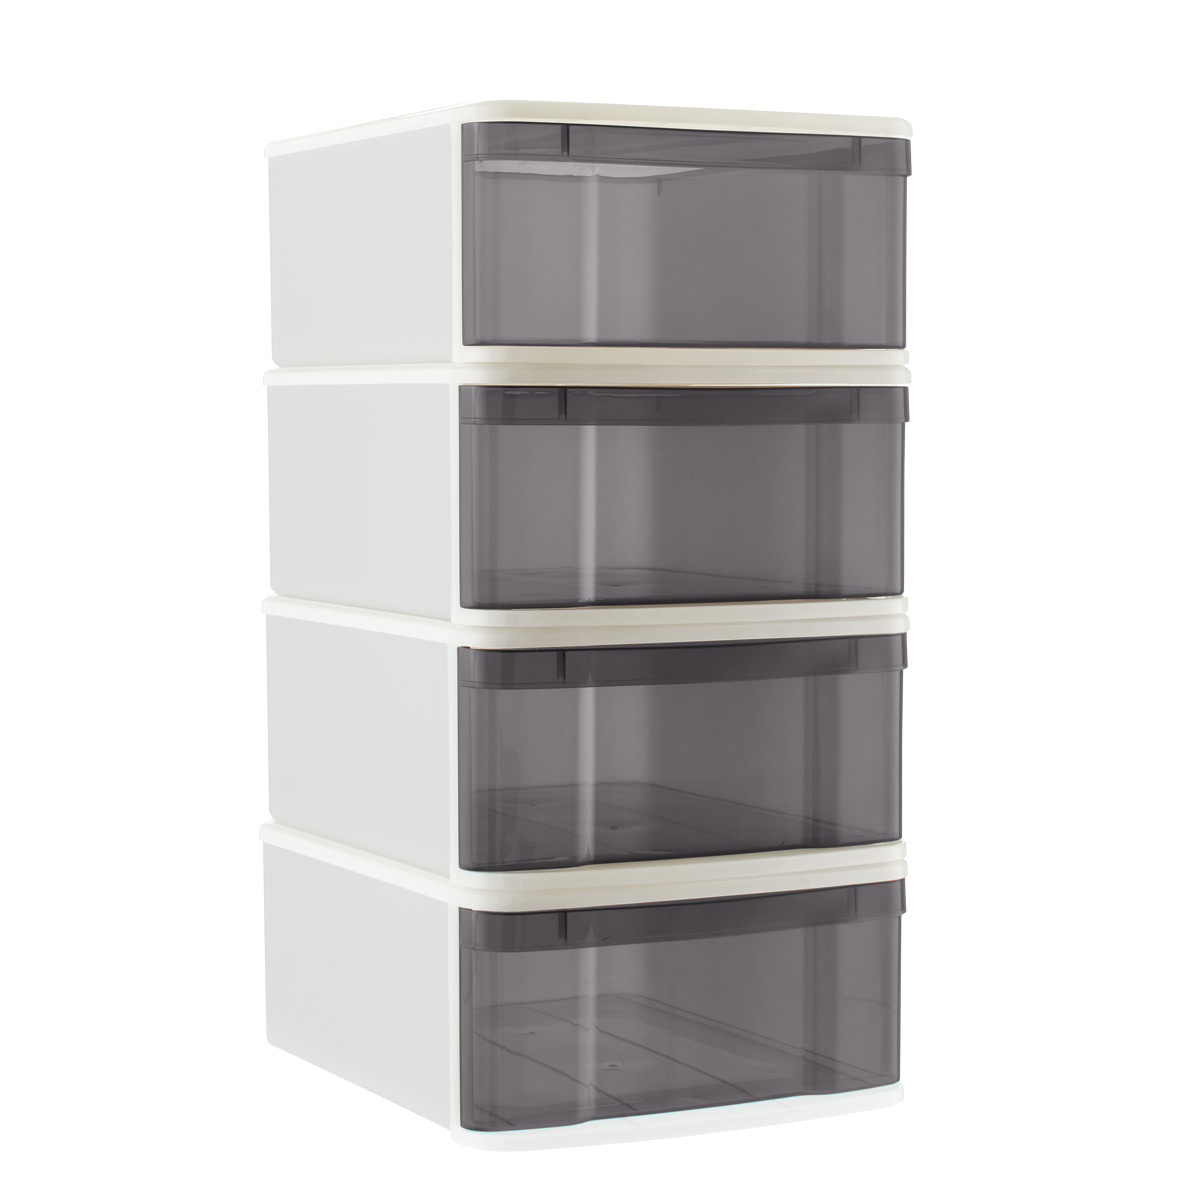 4 Drawer Shelving Chest Unit Toy Tool Equipment Storage Dresser Shelves Gray NEW